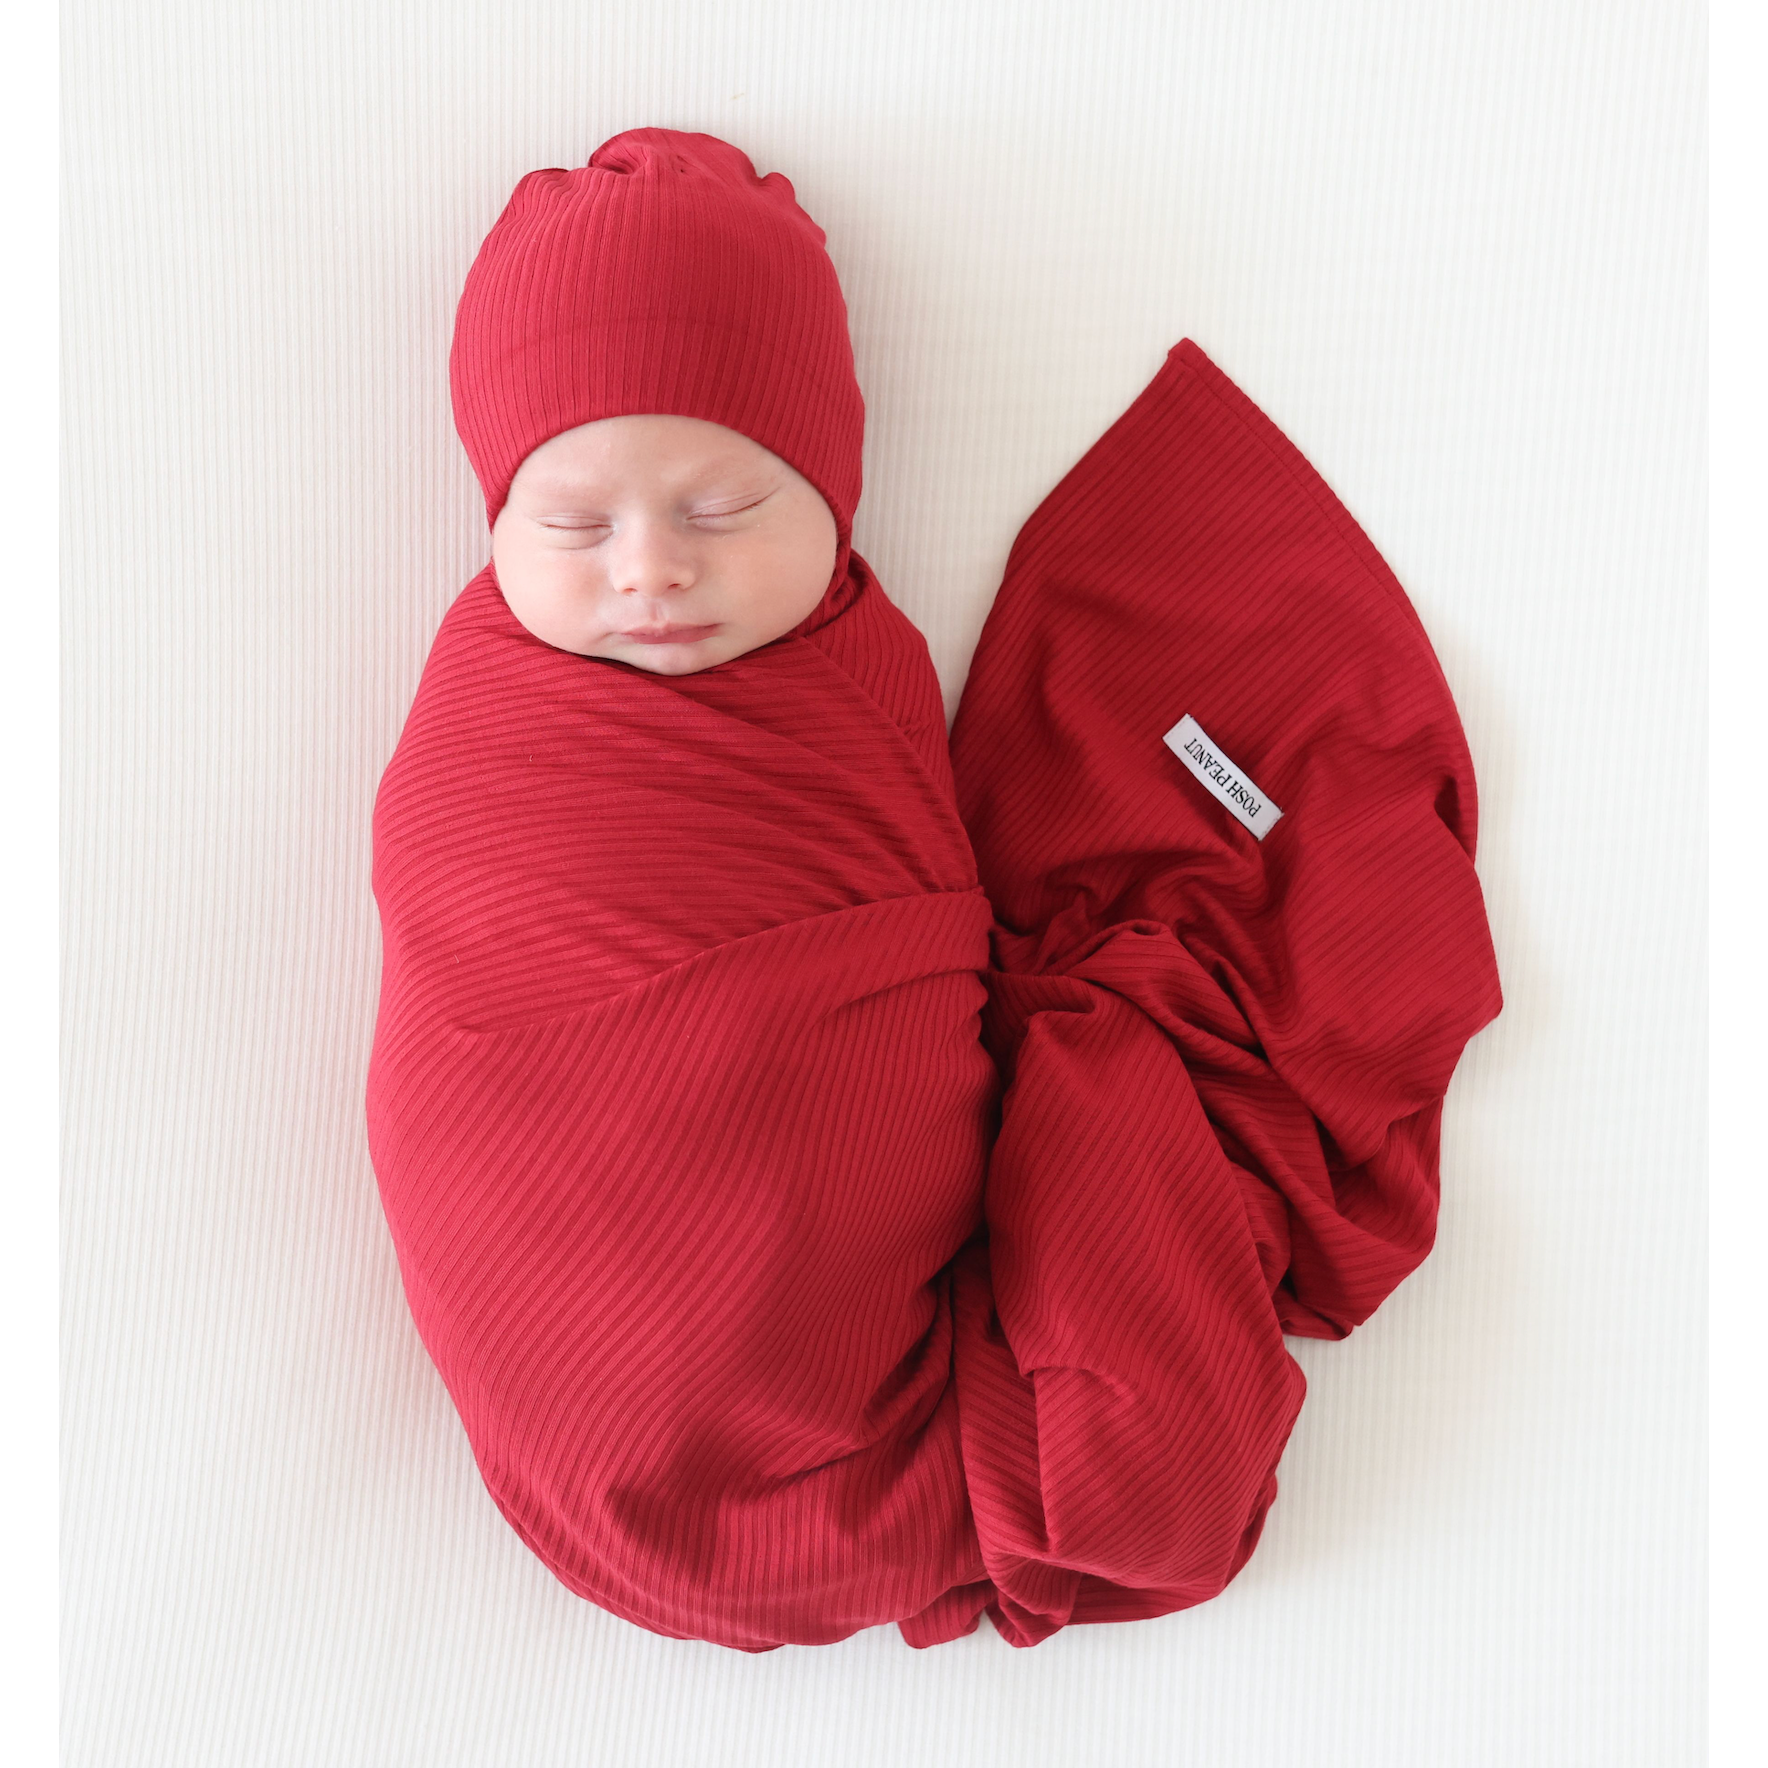 Posh Peanut Dark Red Ribbed Infant Swaddle and Beanie Set-POSH PEANUT-Little Giant Kidz